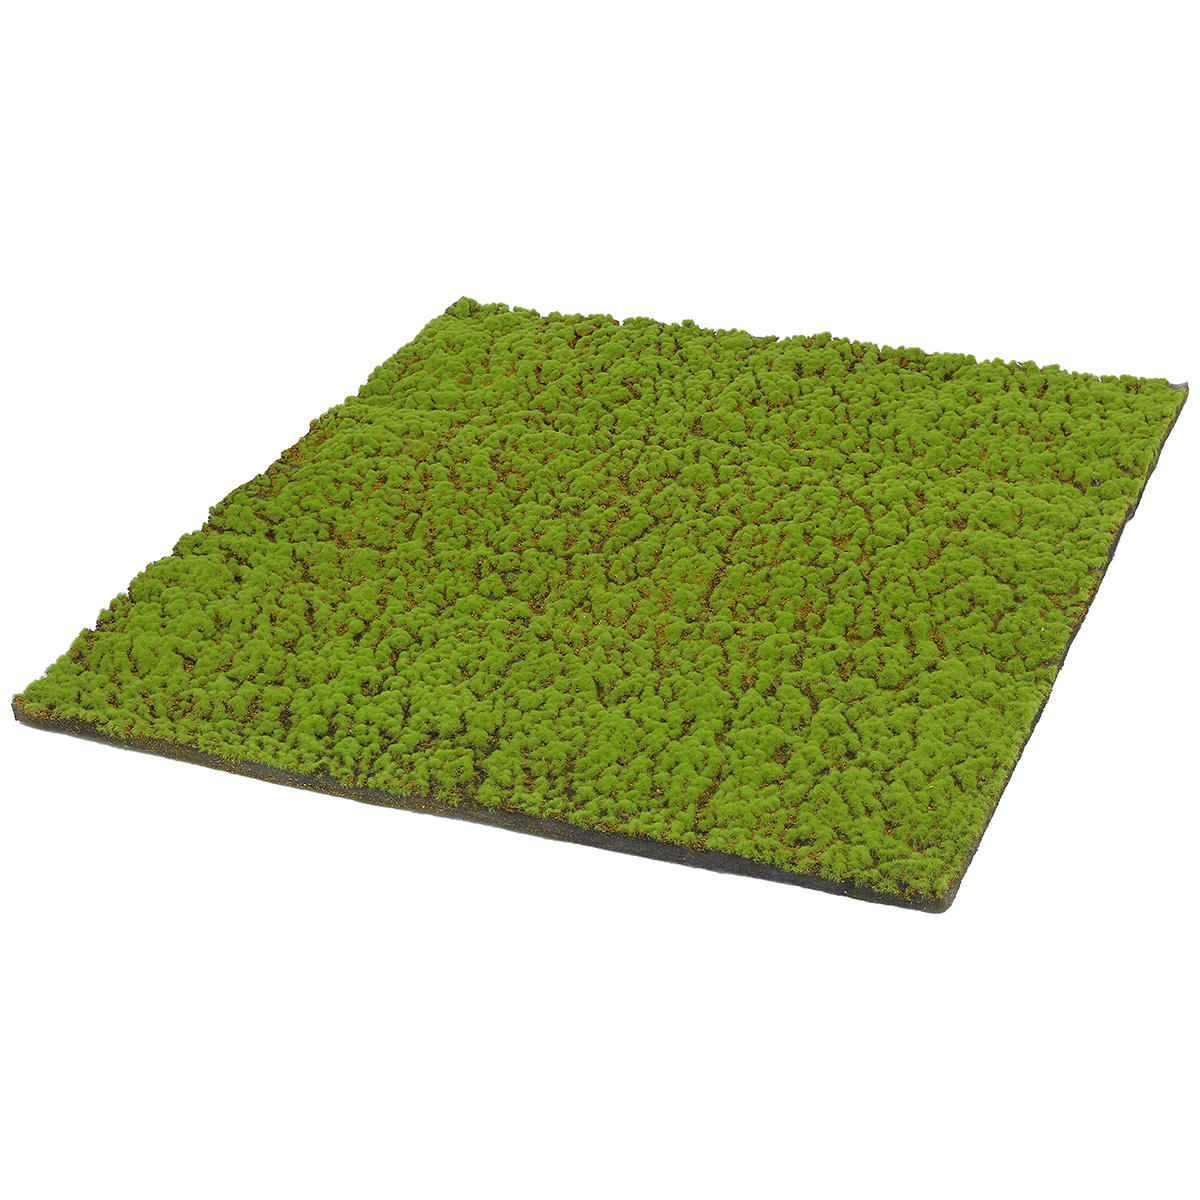 Decorative Green Plants Artificial Moss Faux Moss Grass for Home Garden Patio 